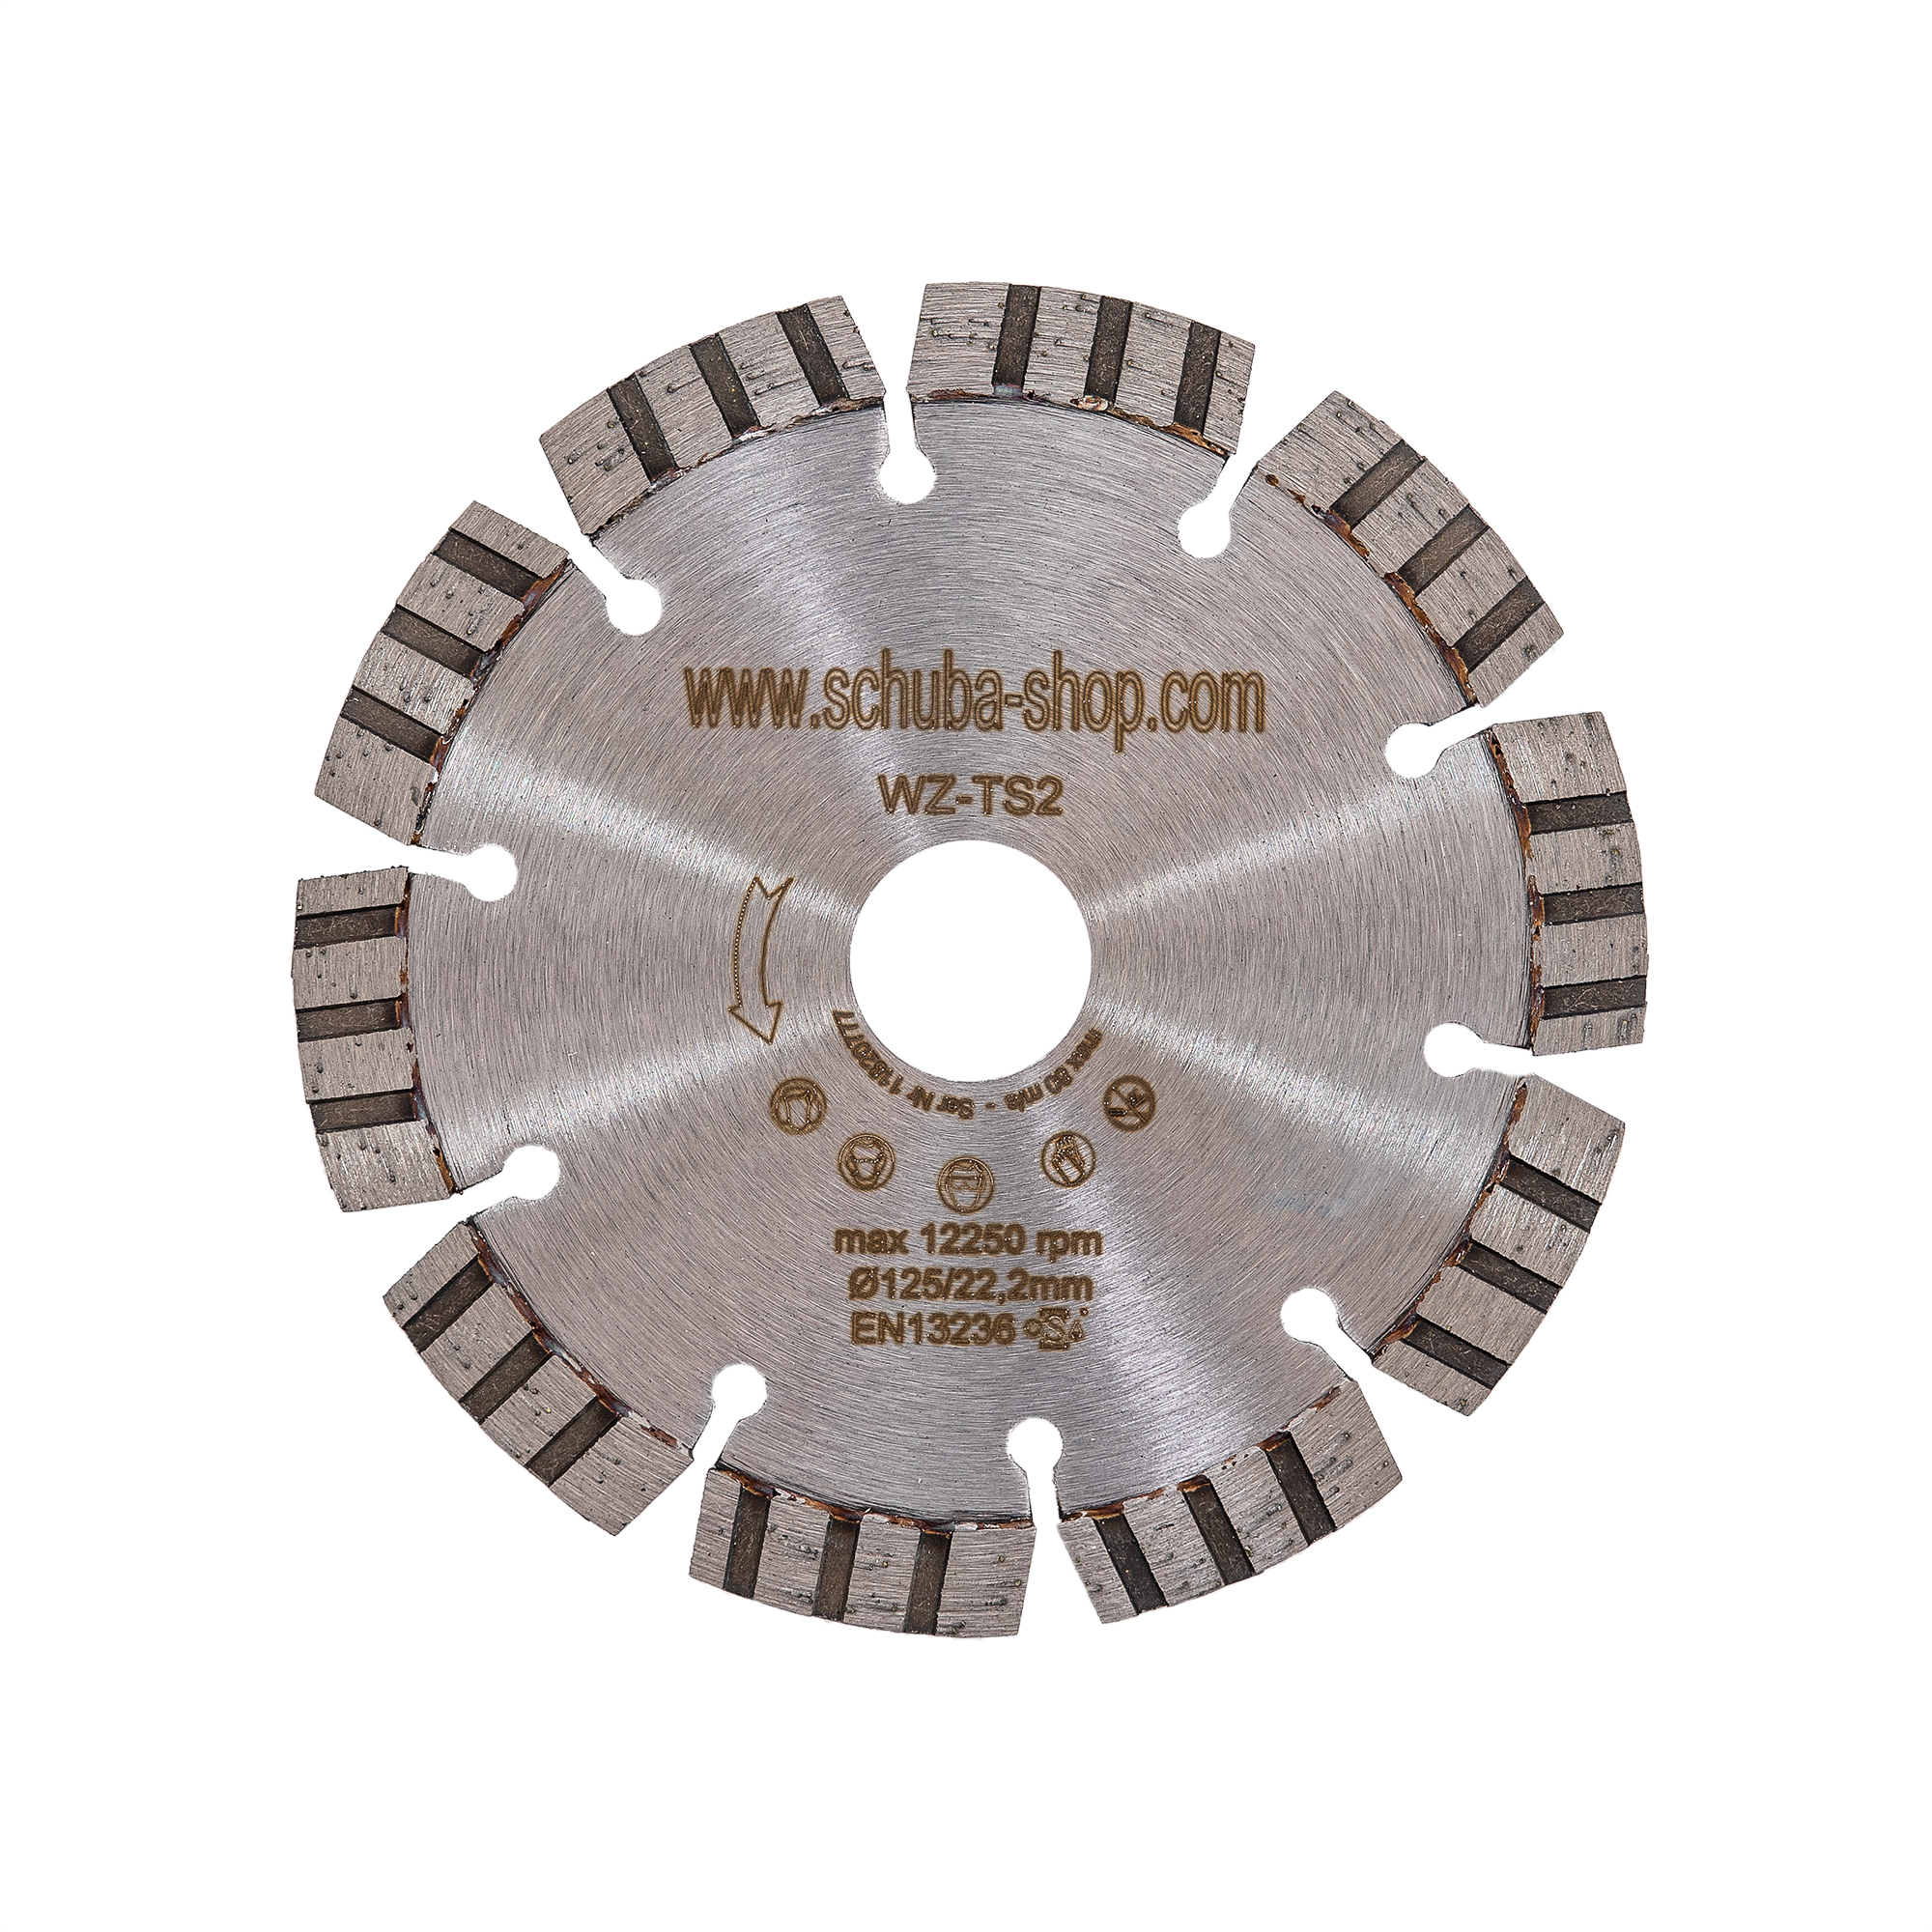 Diamanttrennscheibe Schuba®WZ-TS2, Durchmesser 125mm